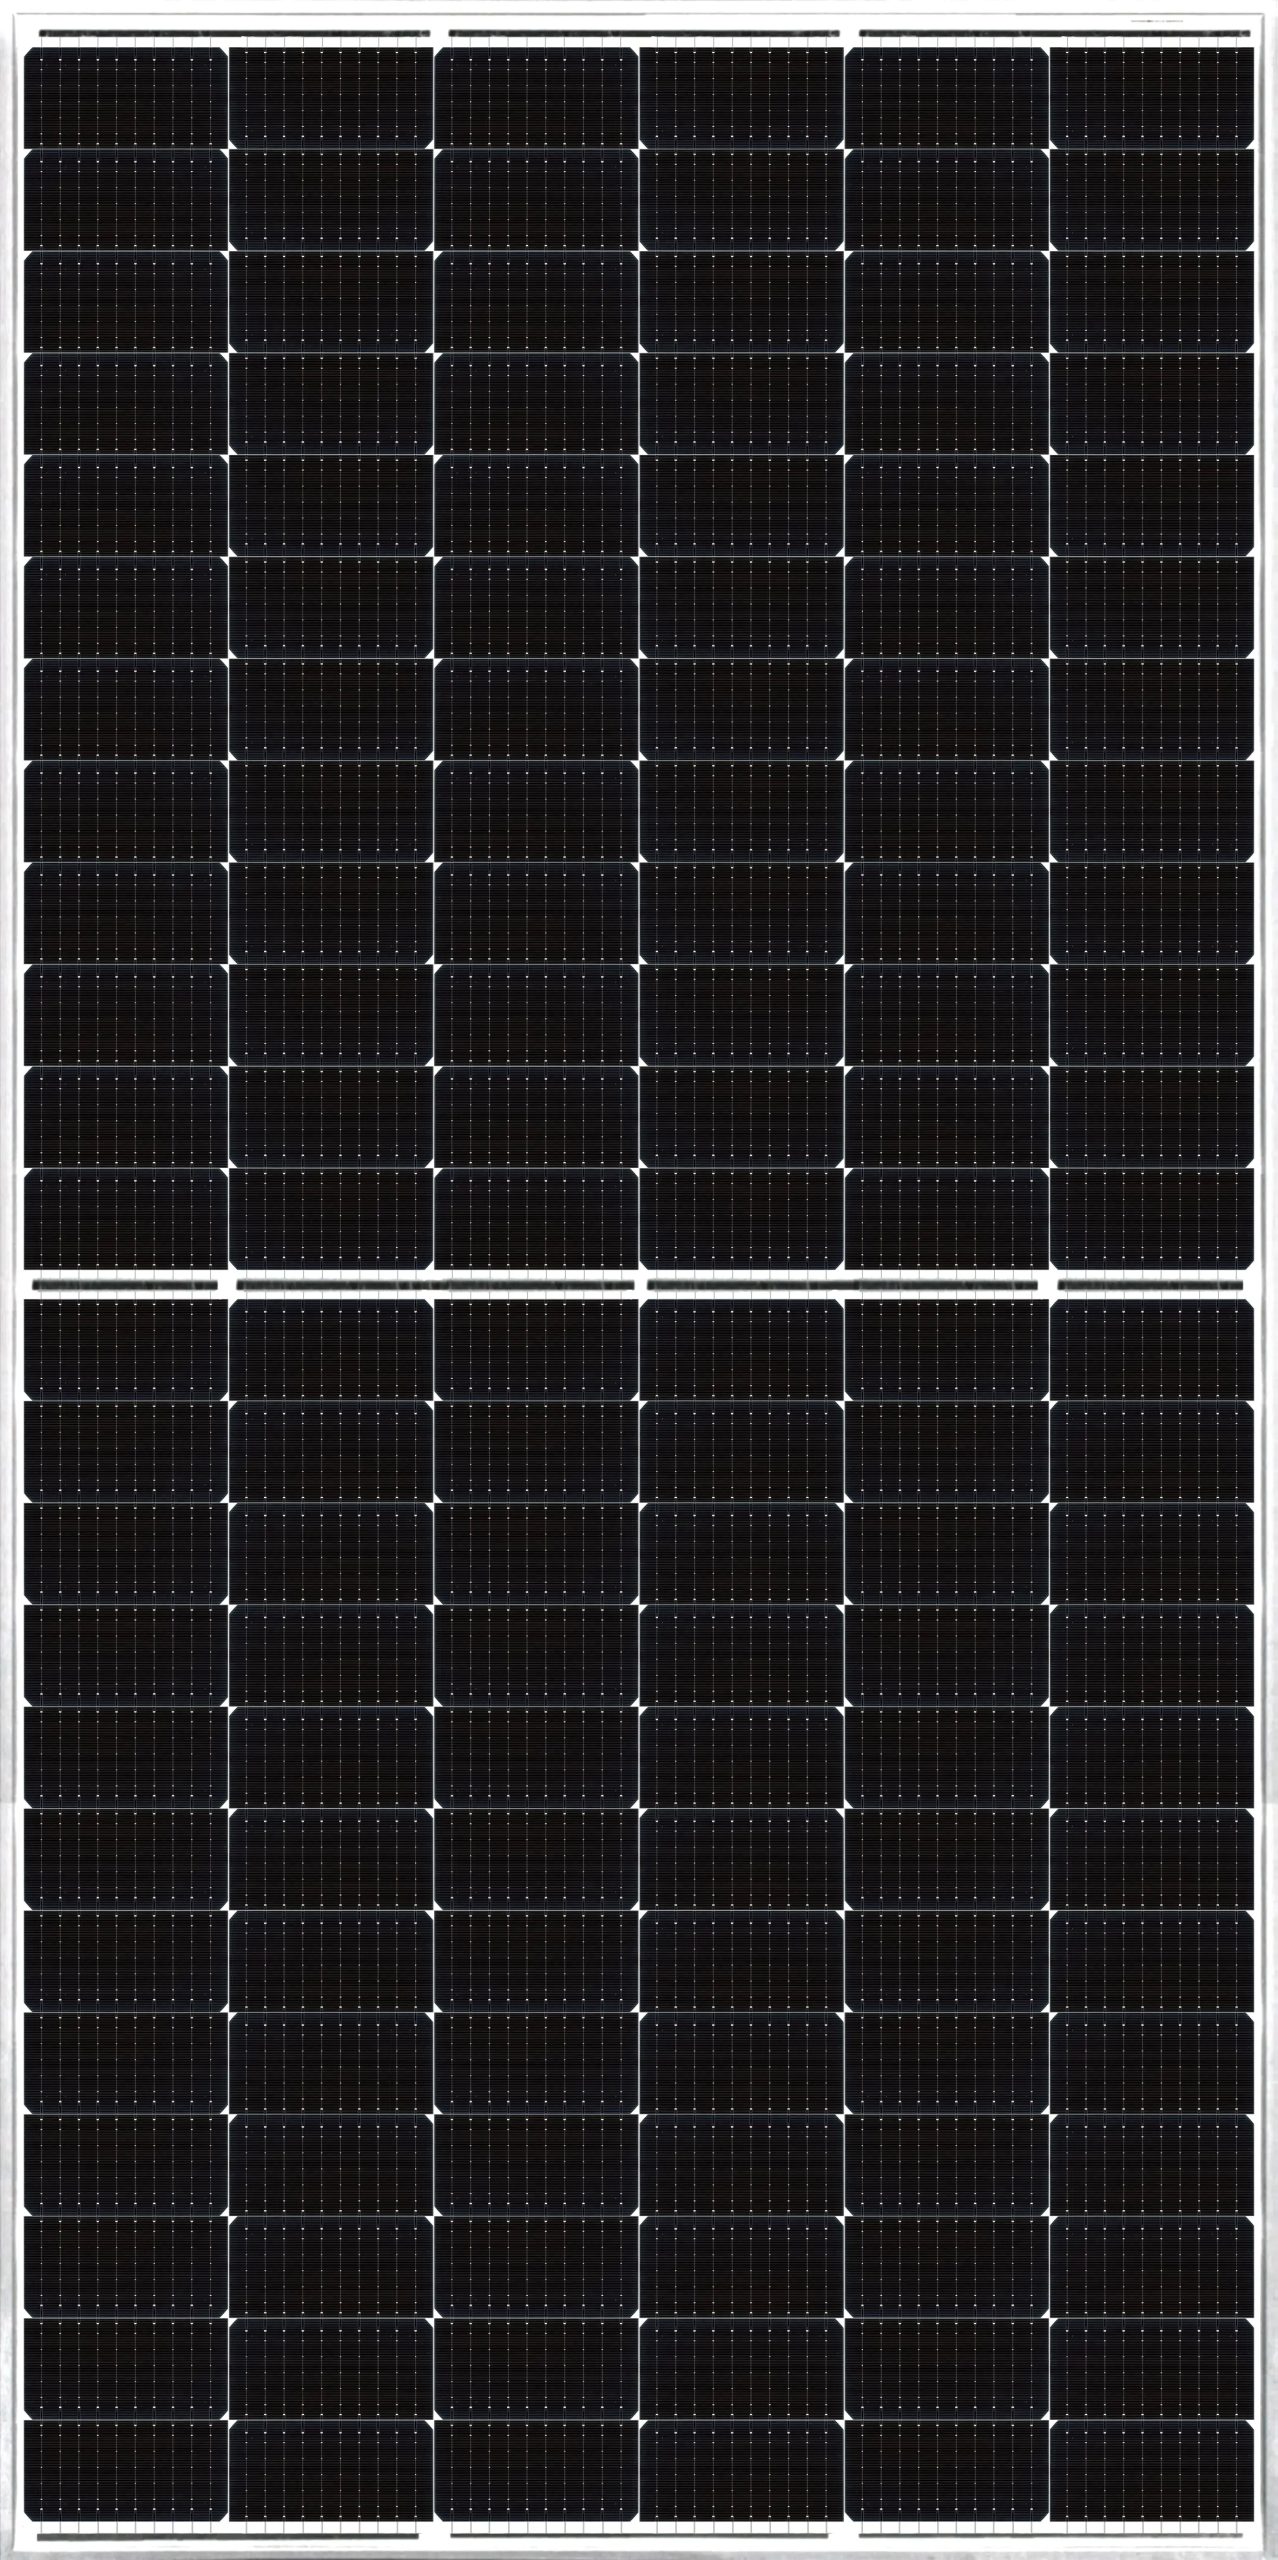 CANADIAN SOLAR HIKU6 LARGE 540W MONO SILVER FRAME 35MM Solar Module